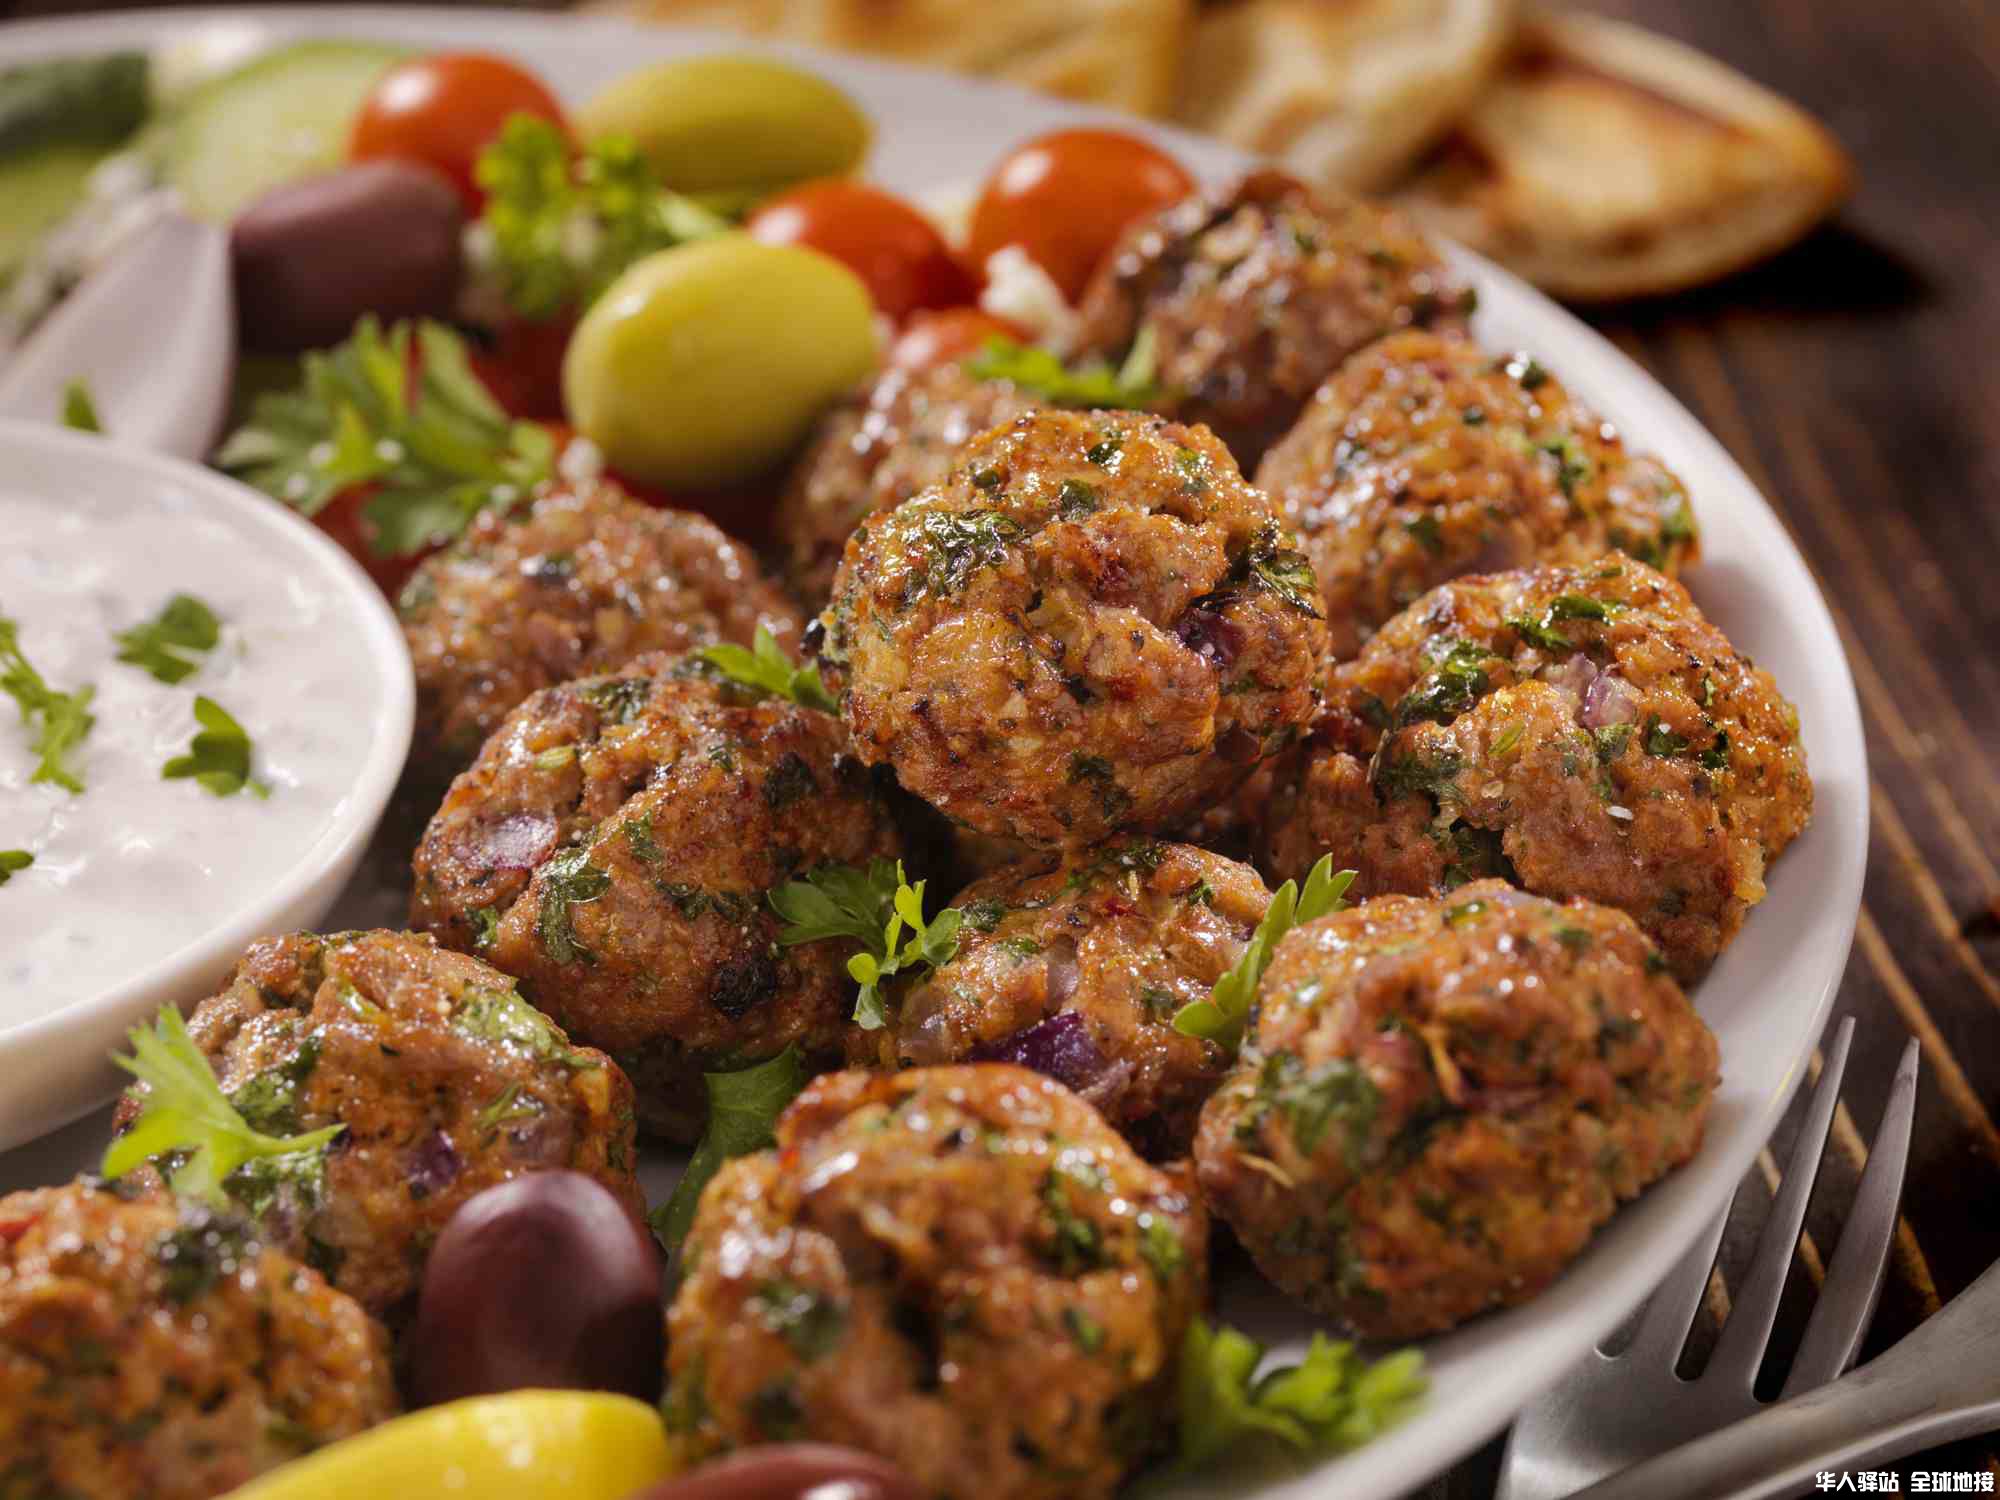 Greek-meatballs-GettyImages-638662402-58d3e4d55f9b584683246847.jpg